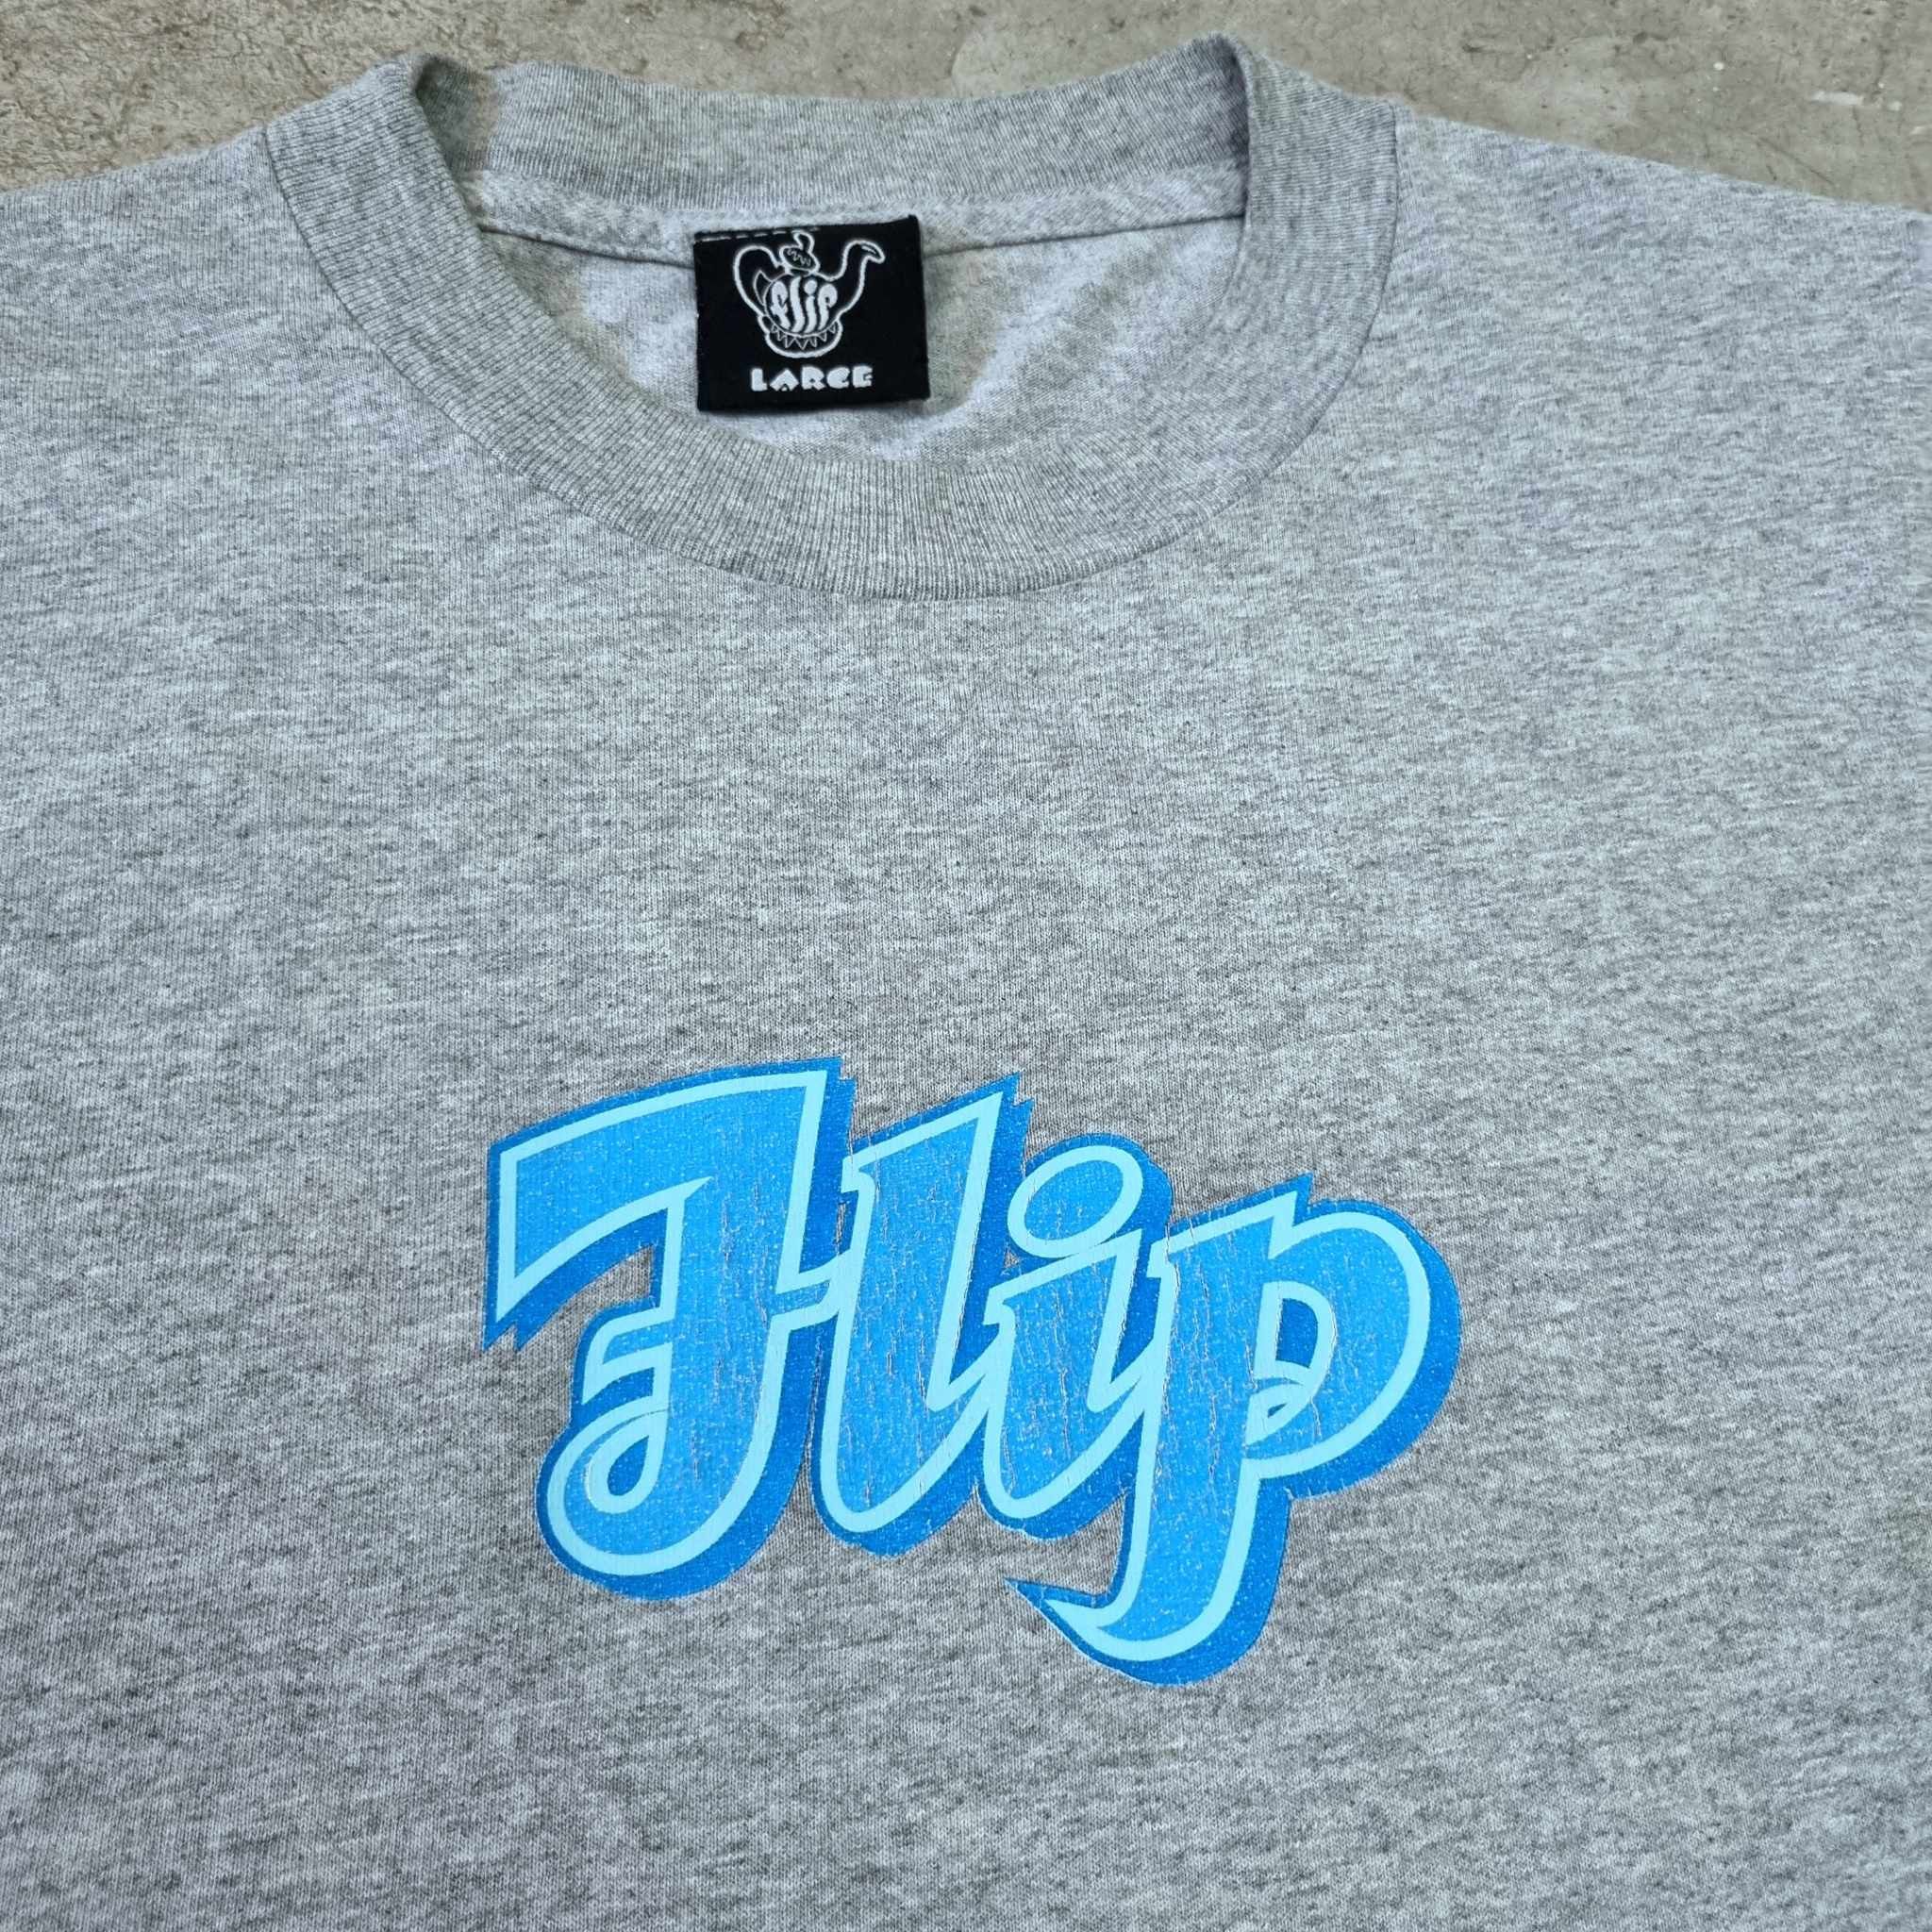 Vintage Flip Skateboards T-shirt 90s – For All To Envy